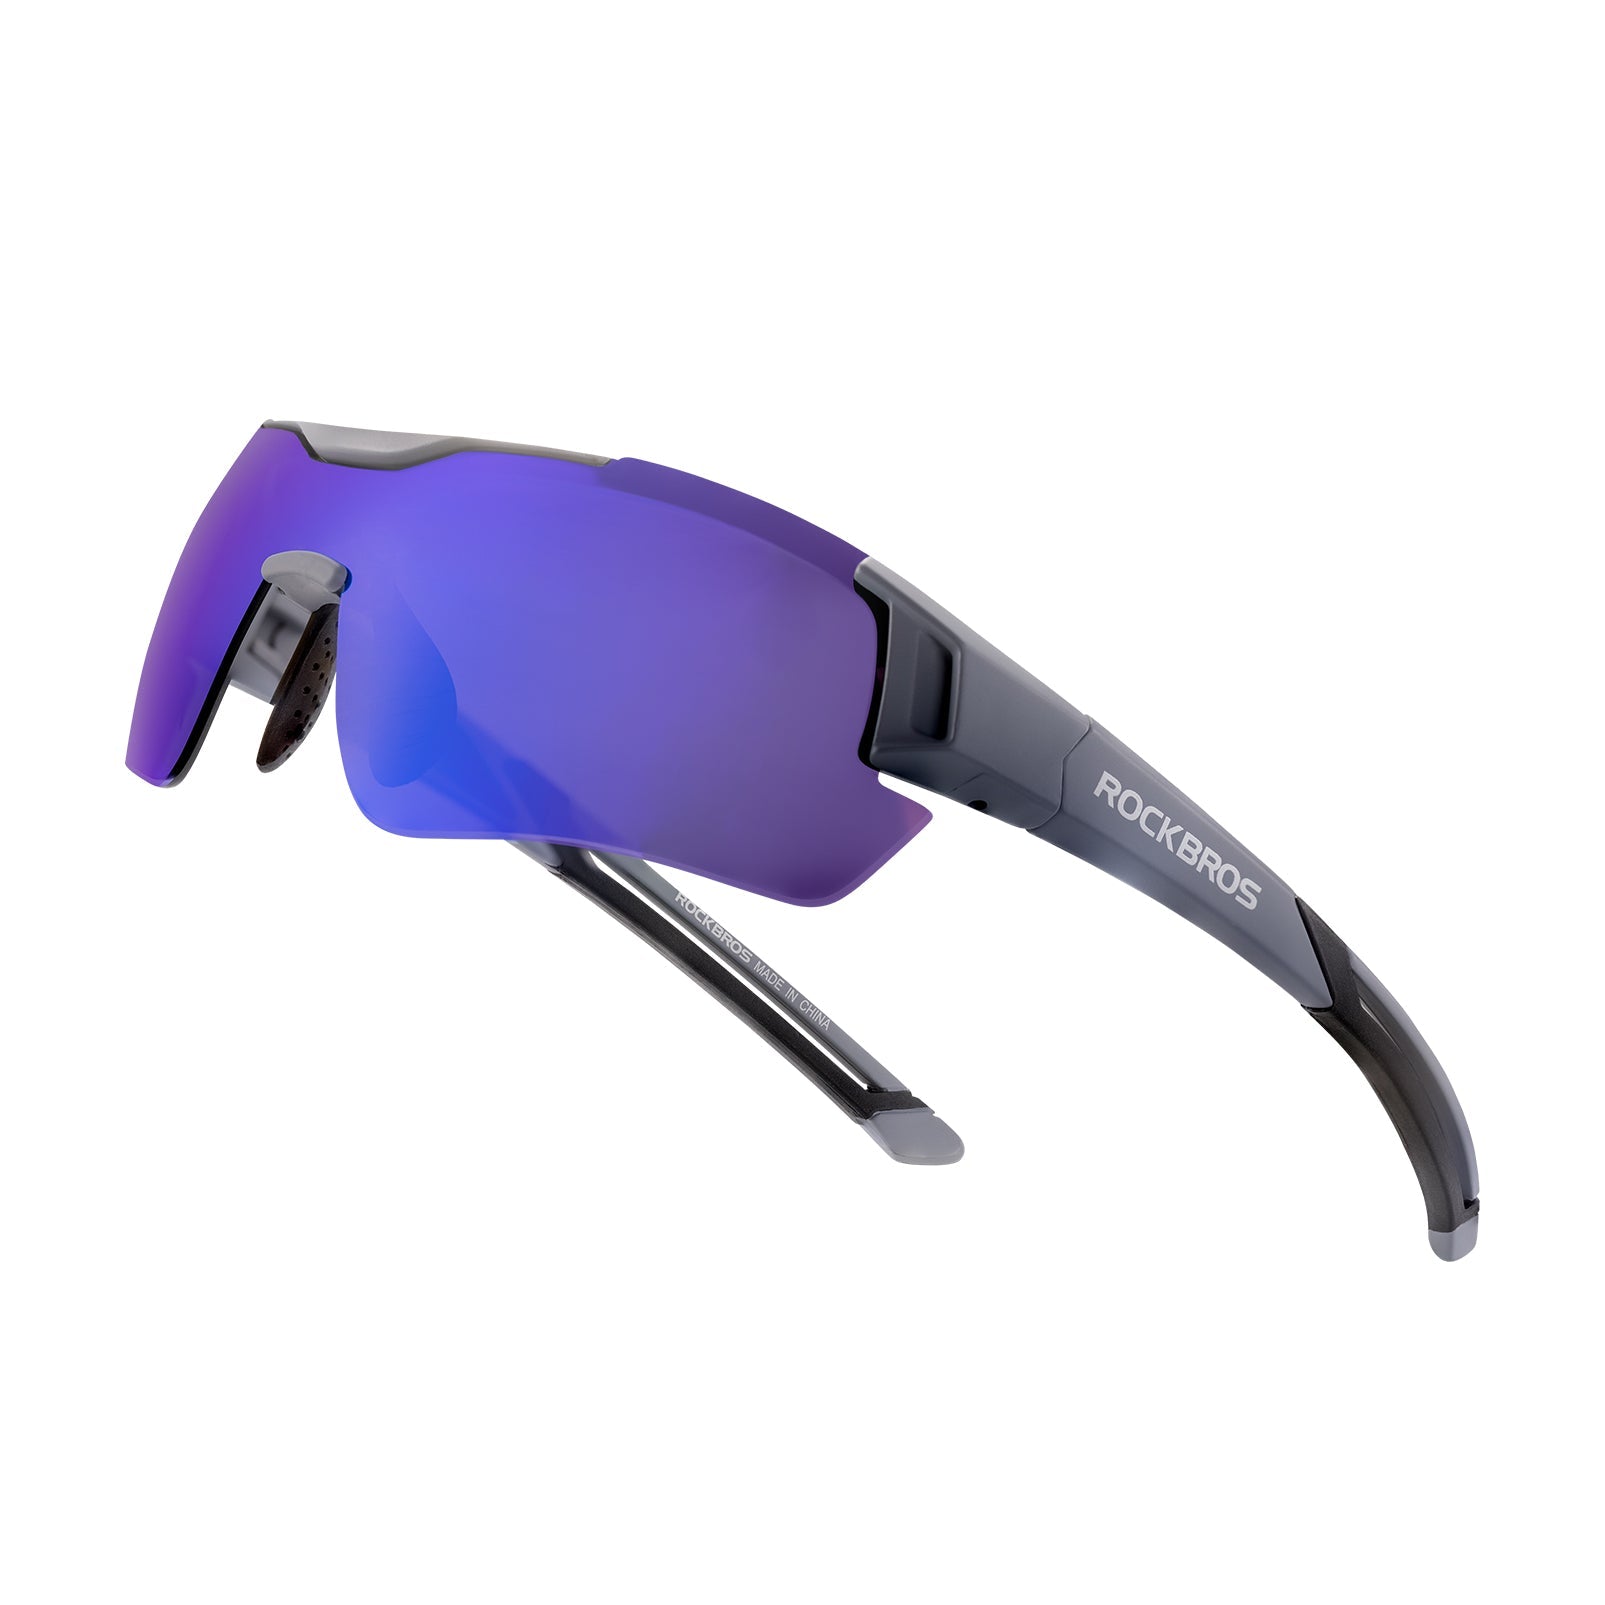 ROCKBROS Polarised Sunglasses for Men Cycling Sunglasses UV Protection, Grey